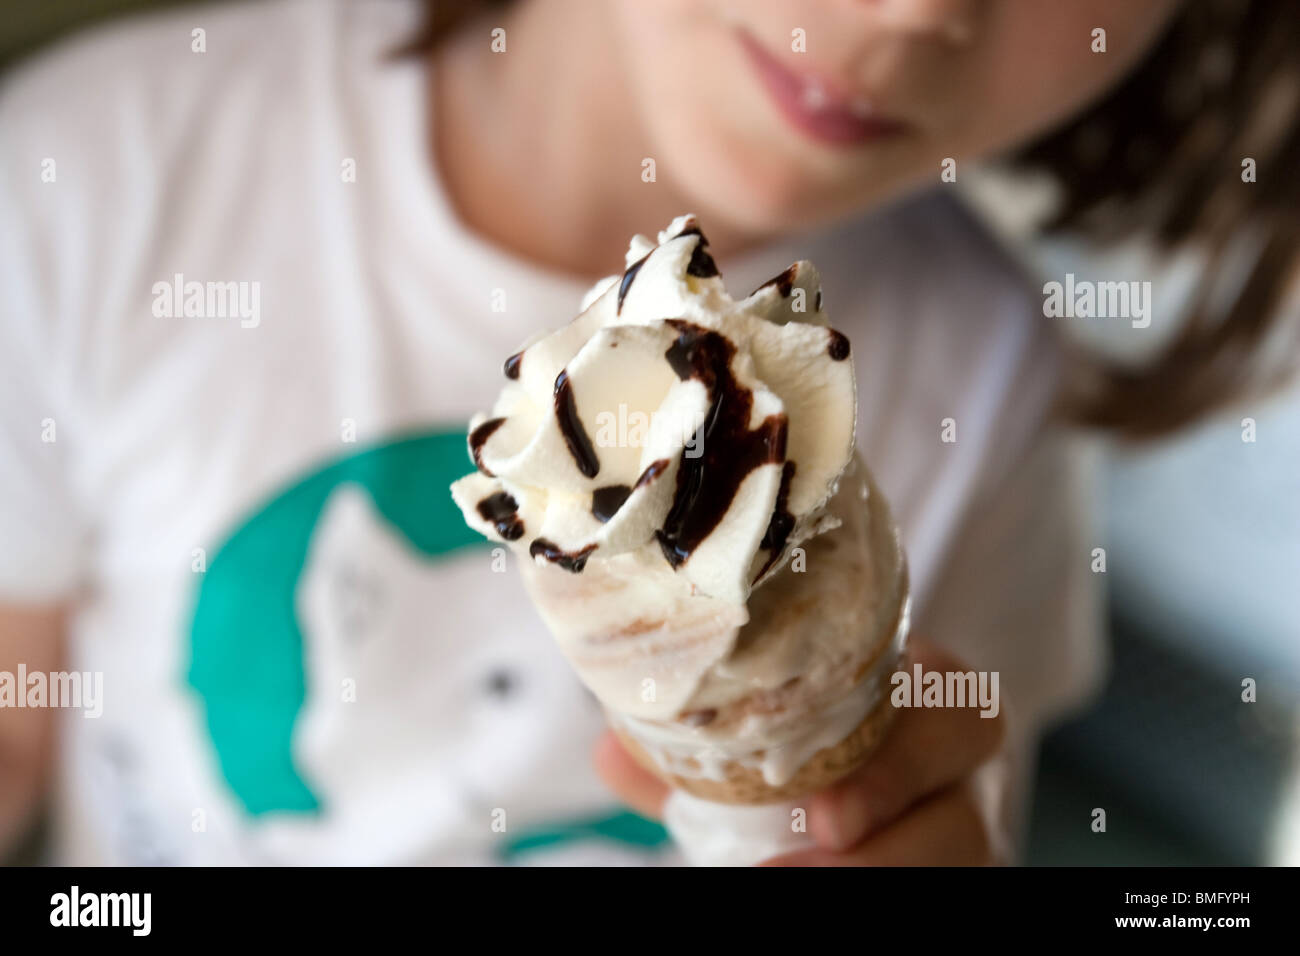 Girl eating 'ice cream' gelato cone outdoor in Italy. Stock Photo